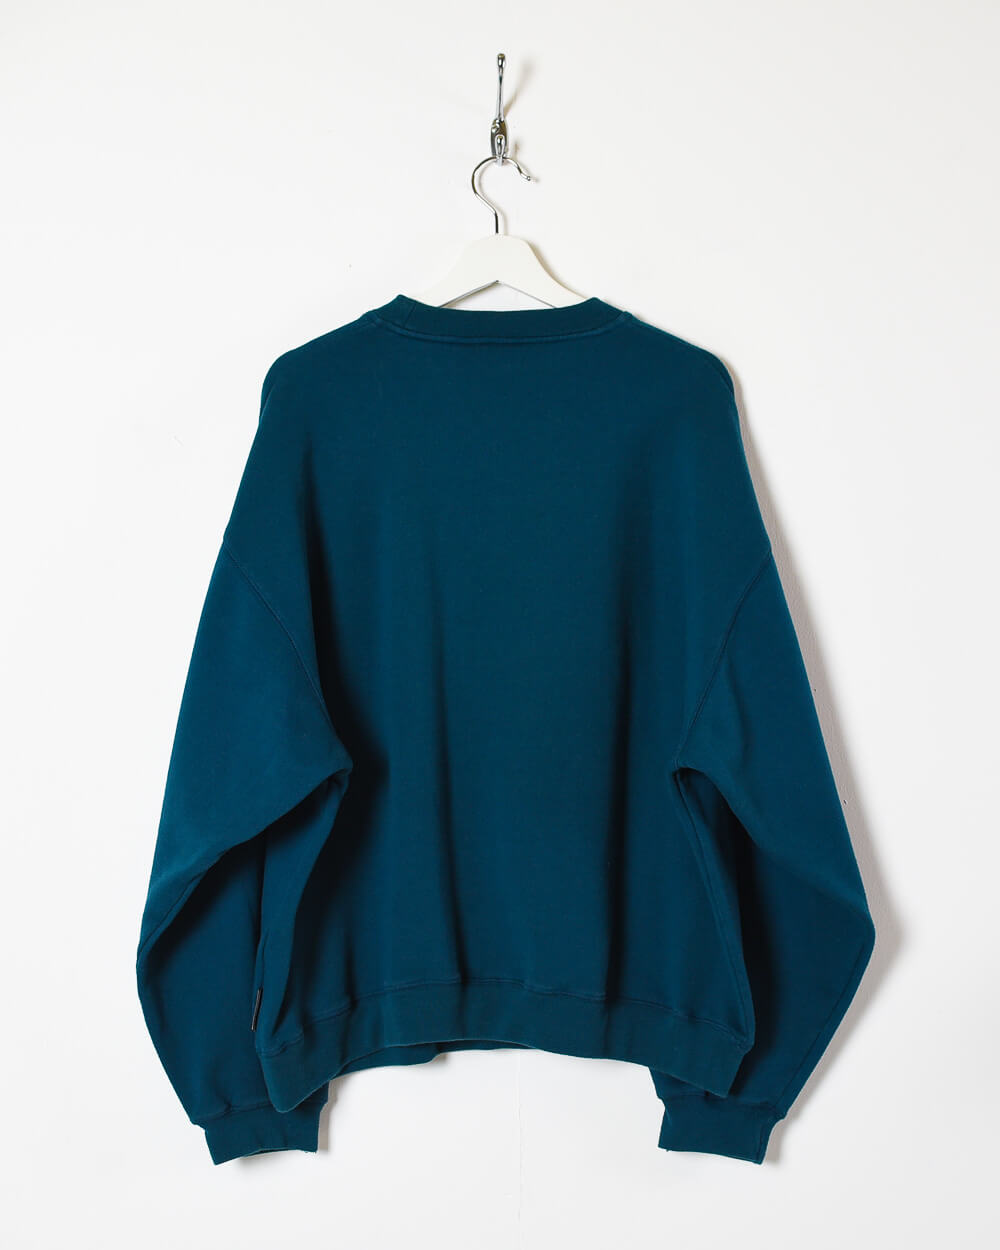 Green Reebok Sweatshirt - X-Large